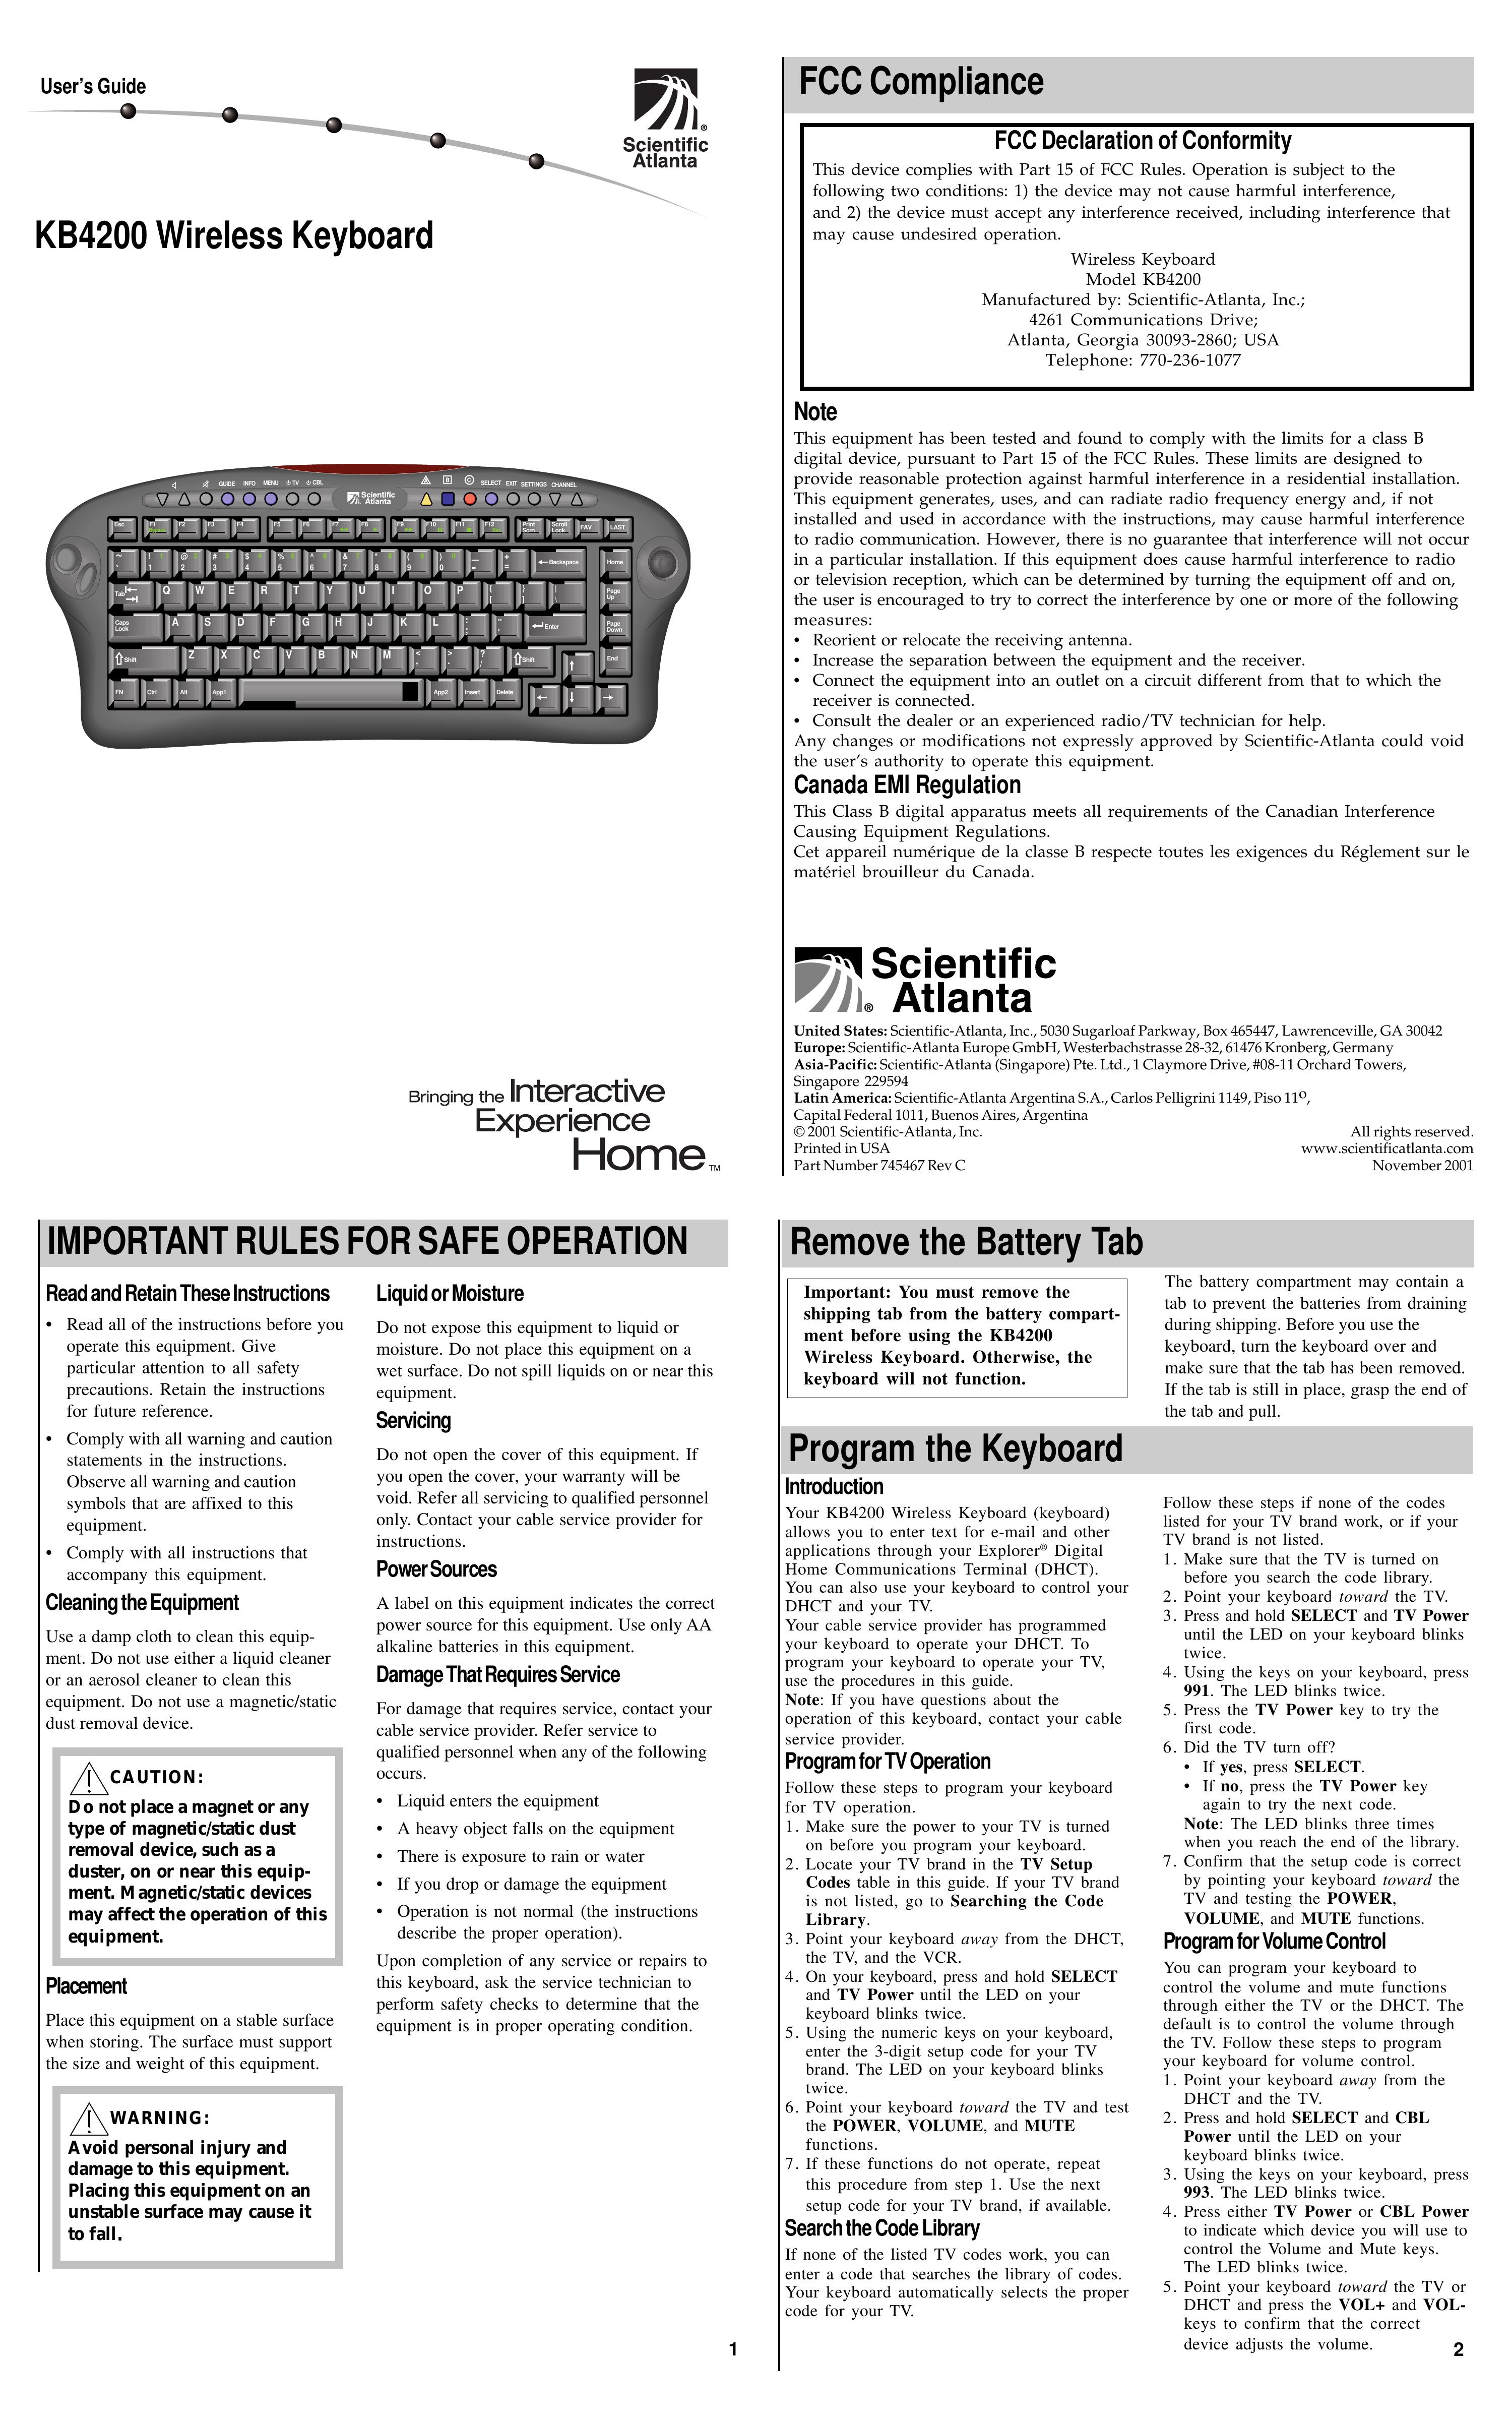 Scientific Atlanta KB4200 Camera Accessories User Manual